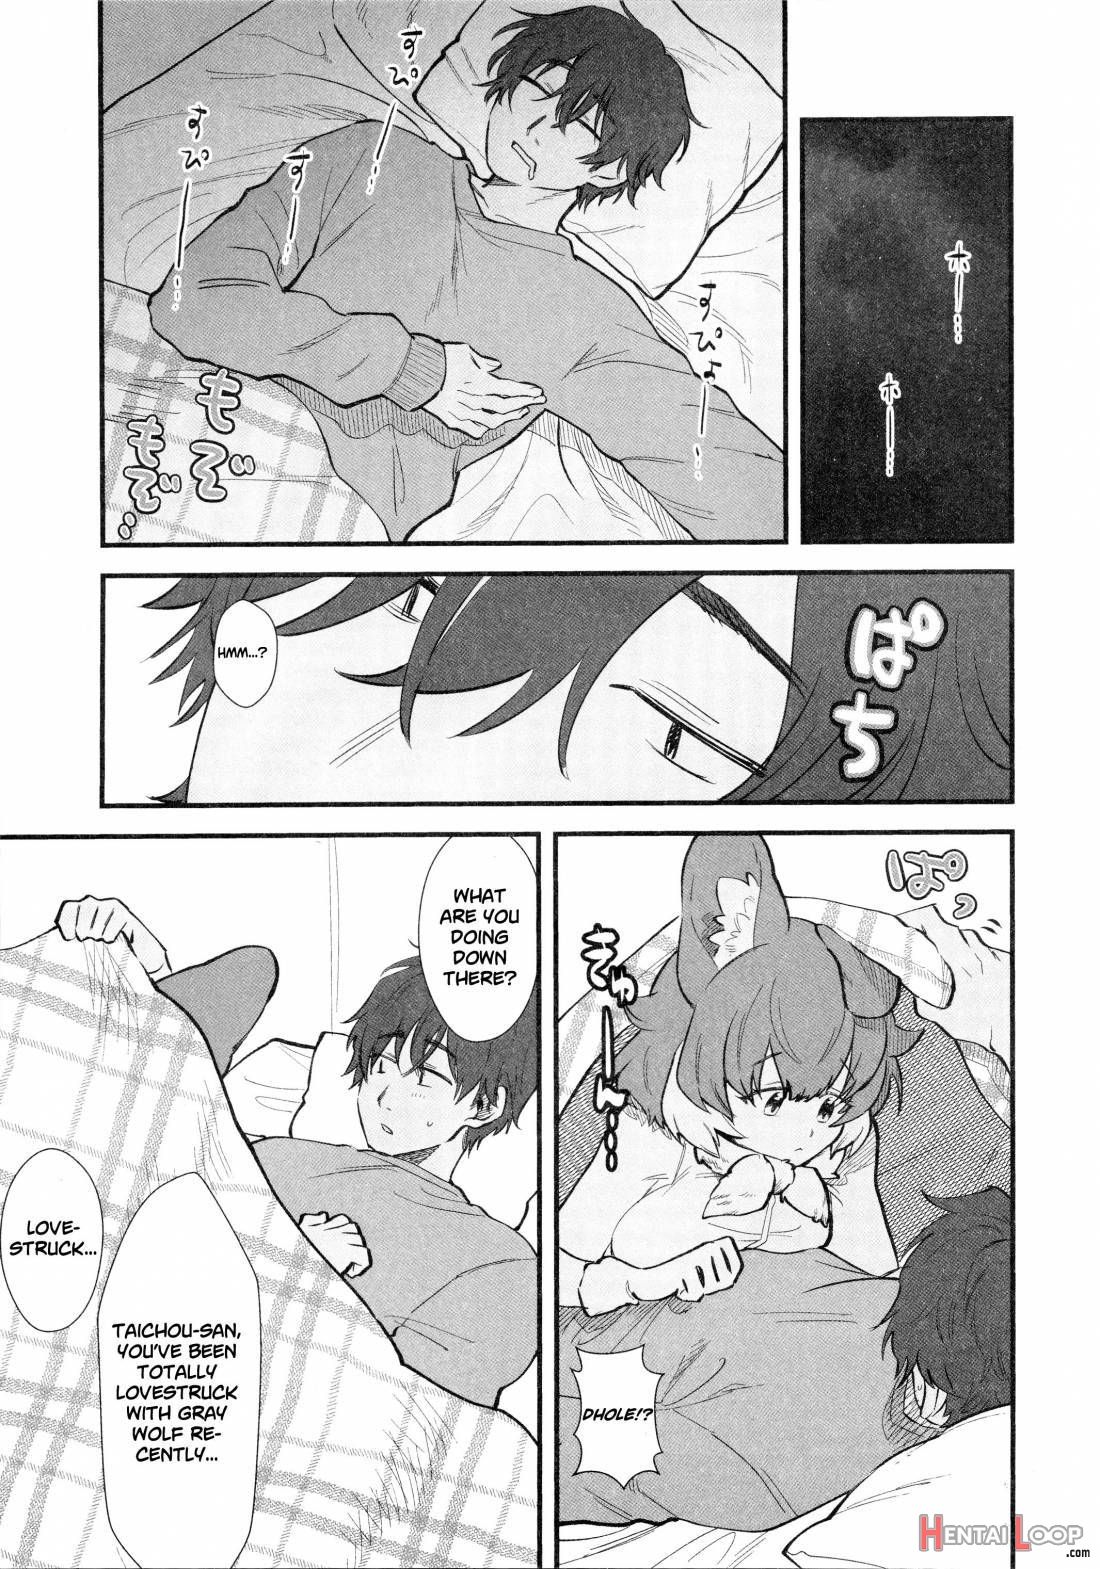 Taichou-san And Dhole-chan. page 7